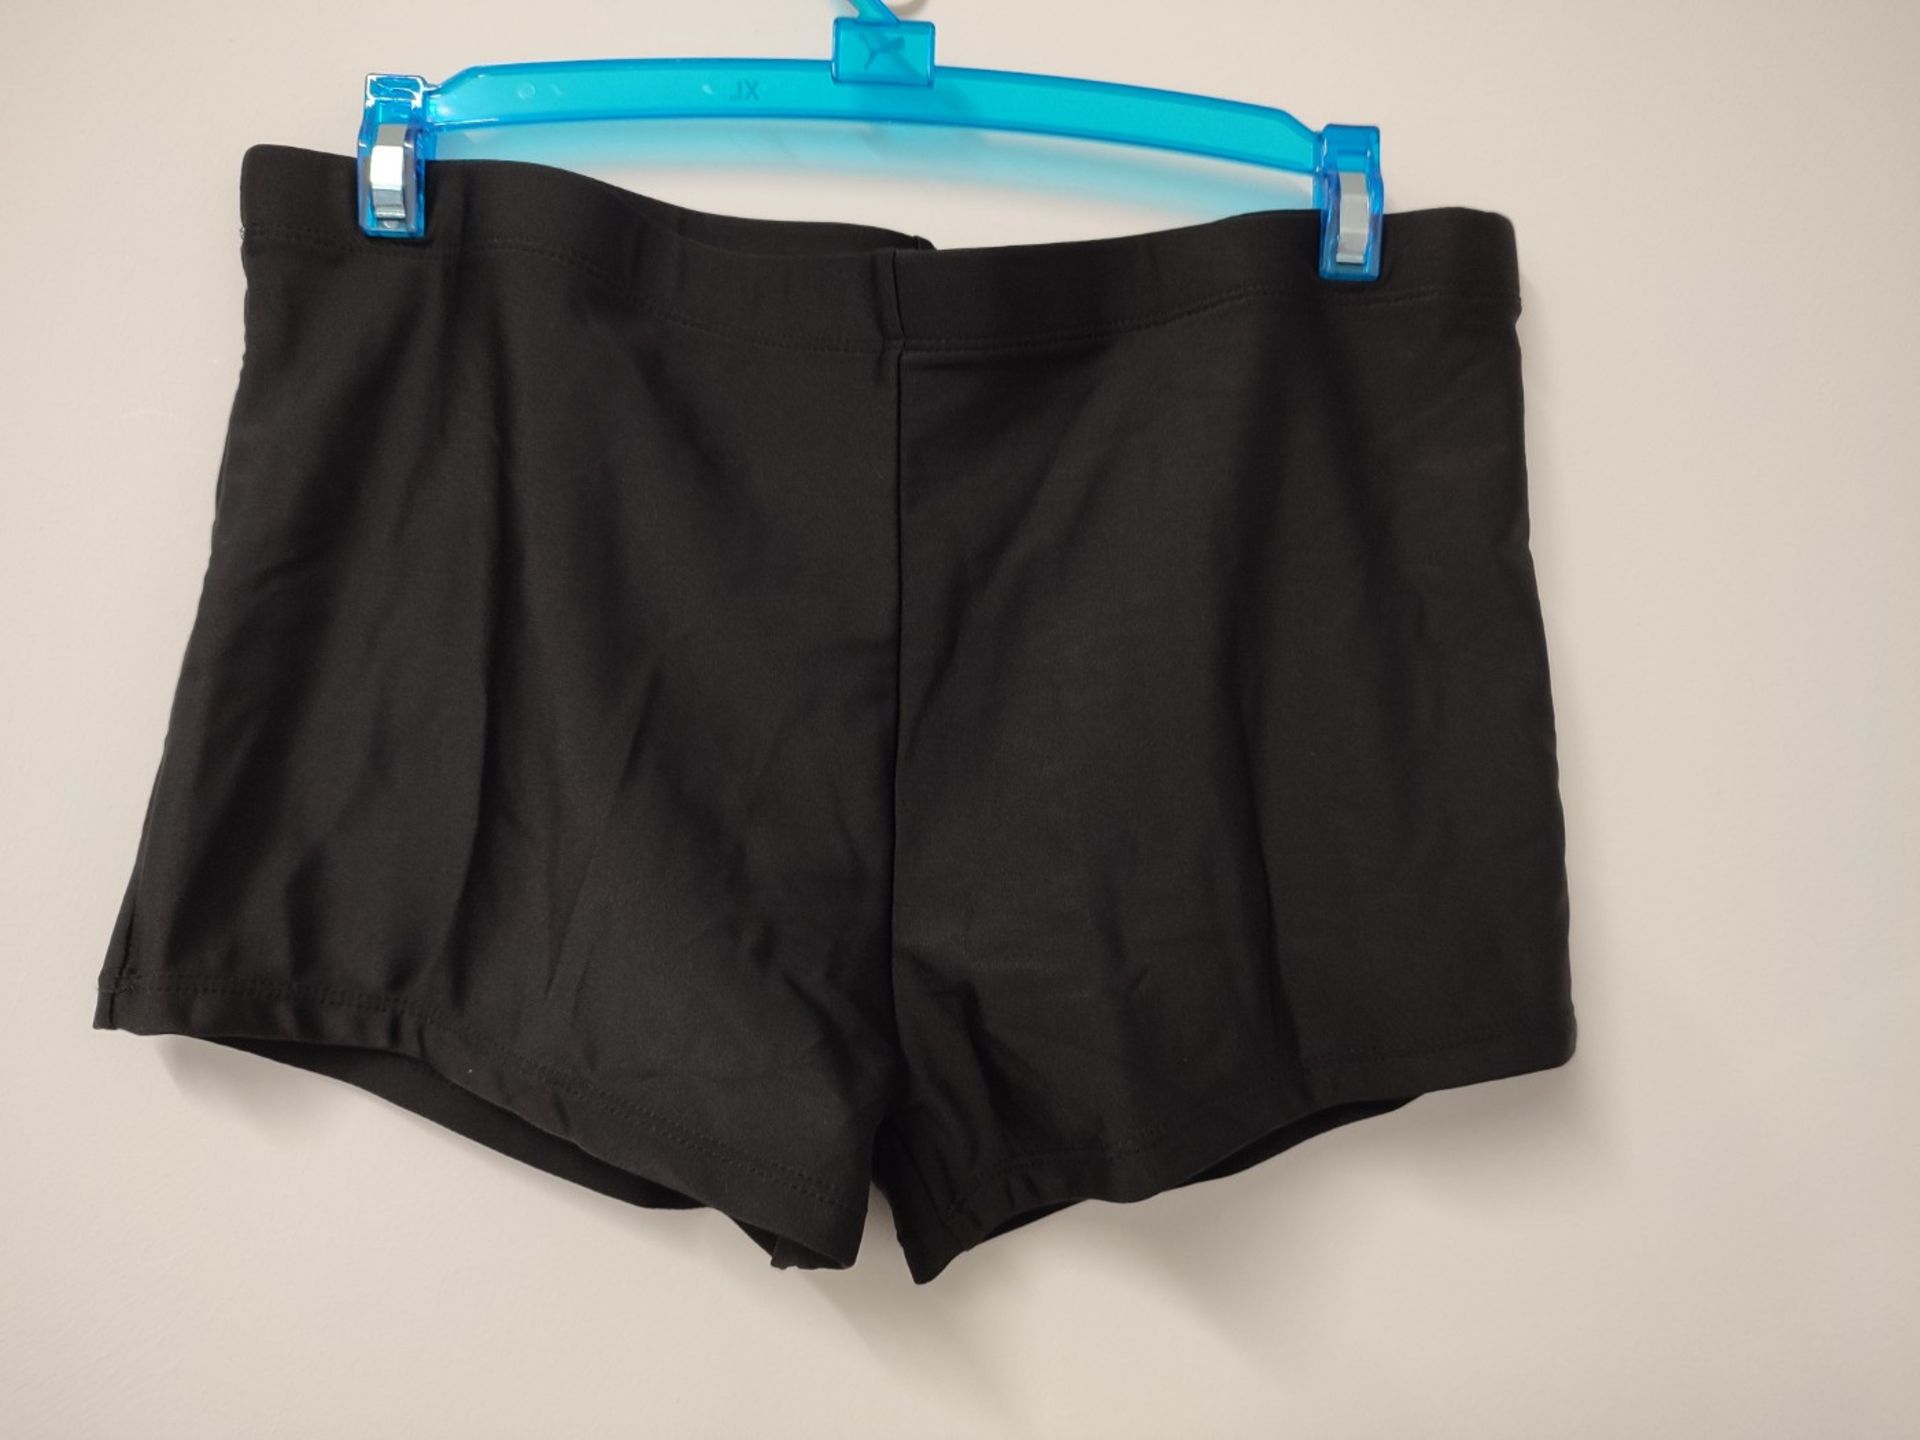 Octopus F5682 Oversized Swimwear Tankini Set with Hot Pants Size 34-66, Tankini black, - Bild 2 aus 2